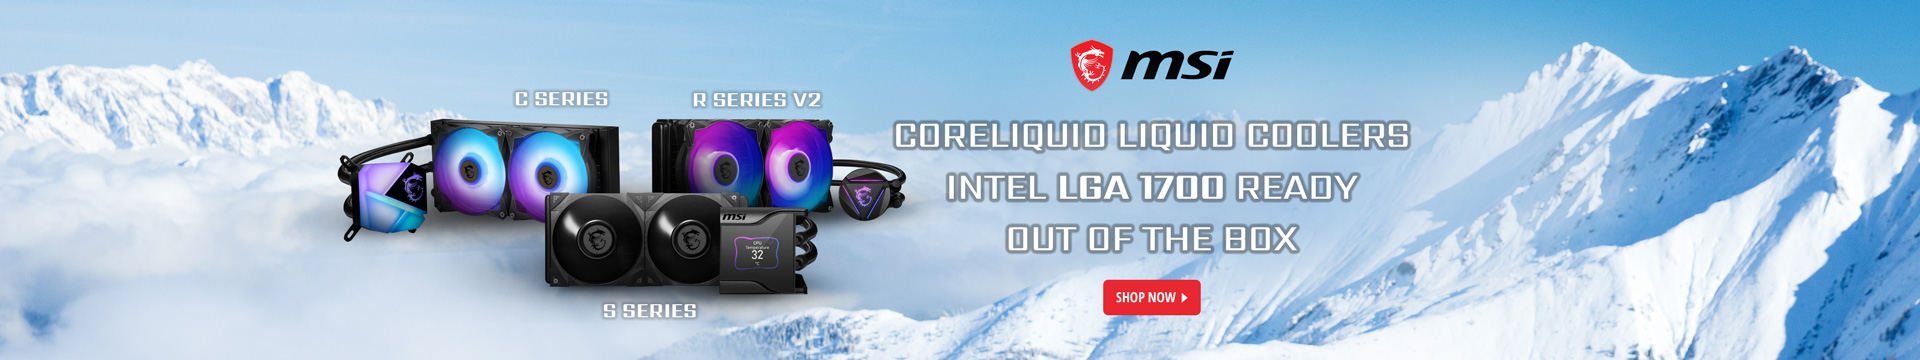 Coreliquid liquid coolers intel LGA 1700 ready out of the box